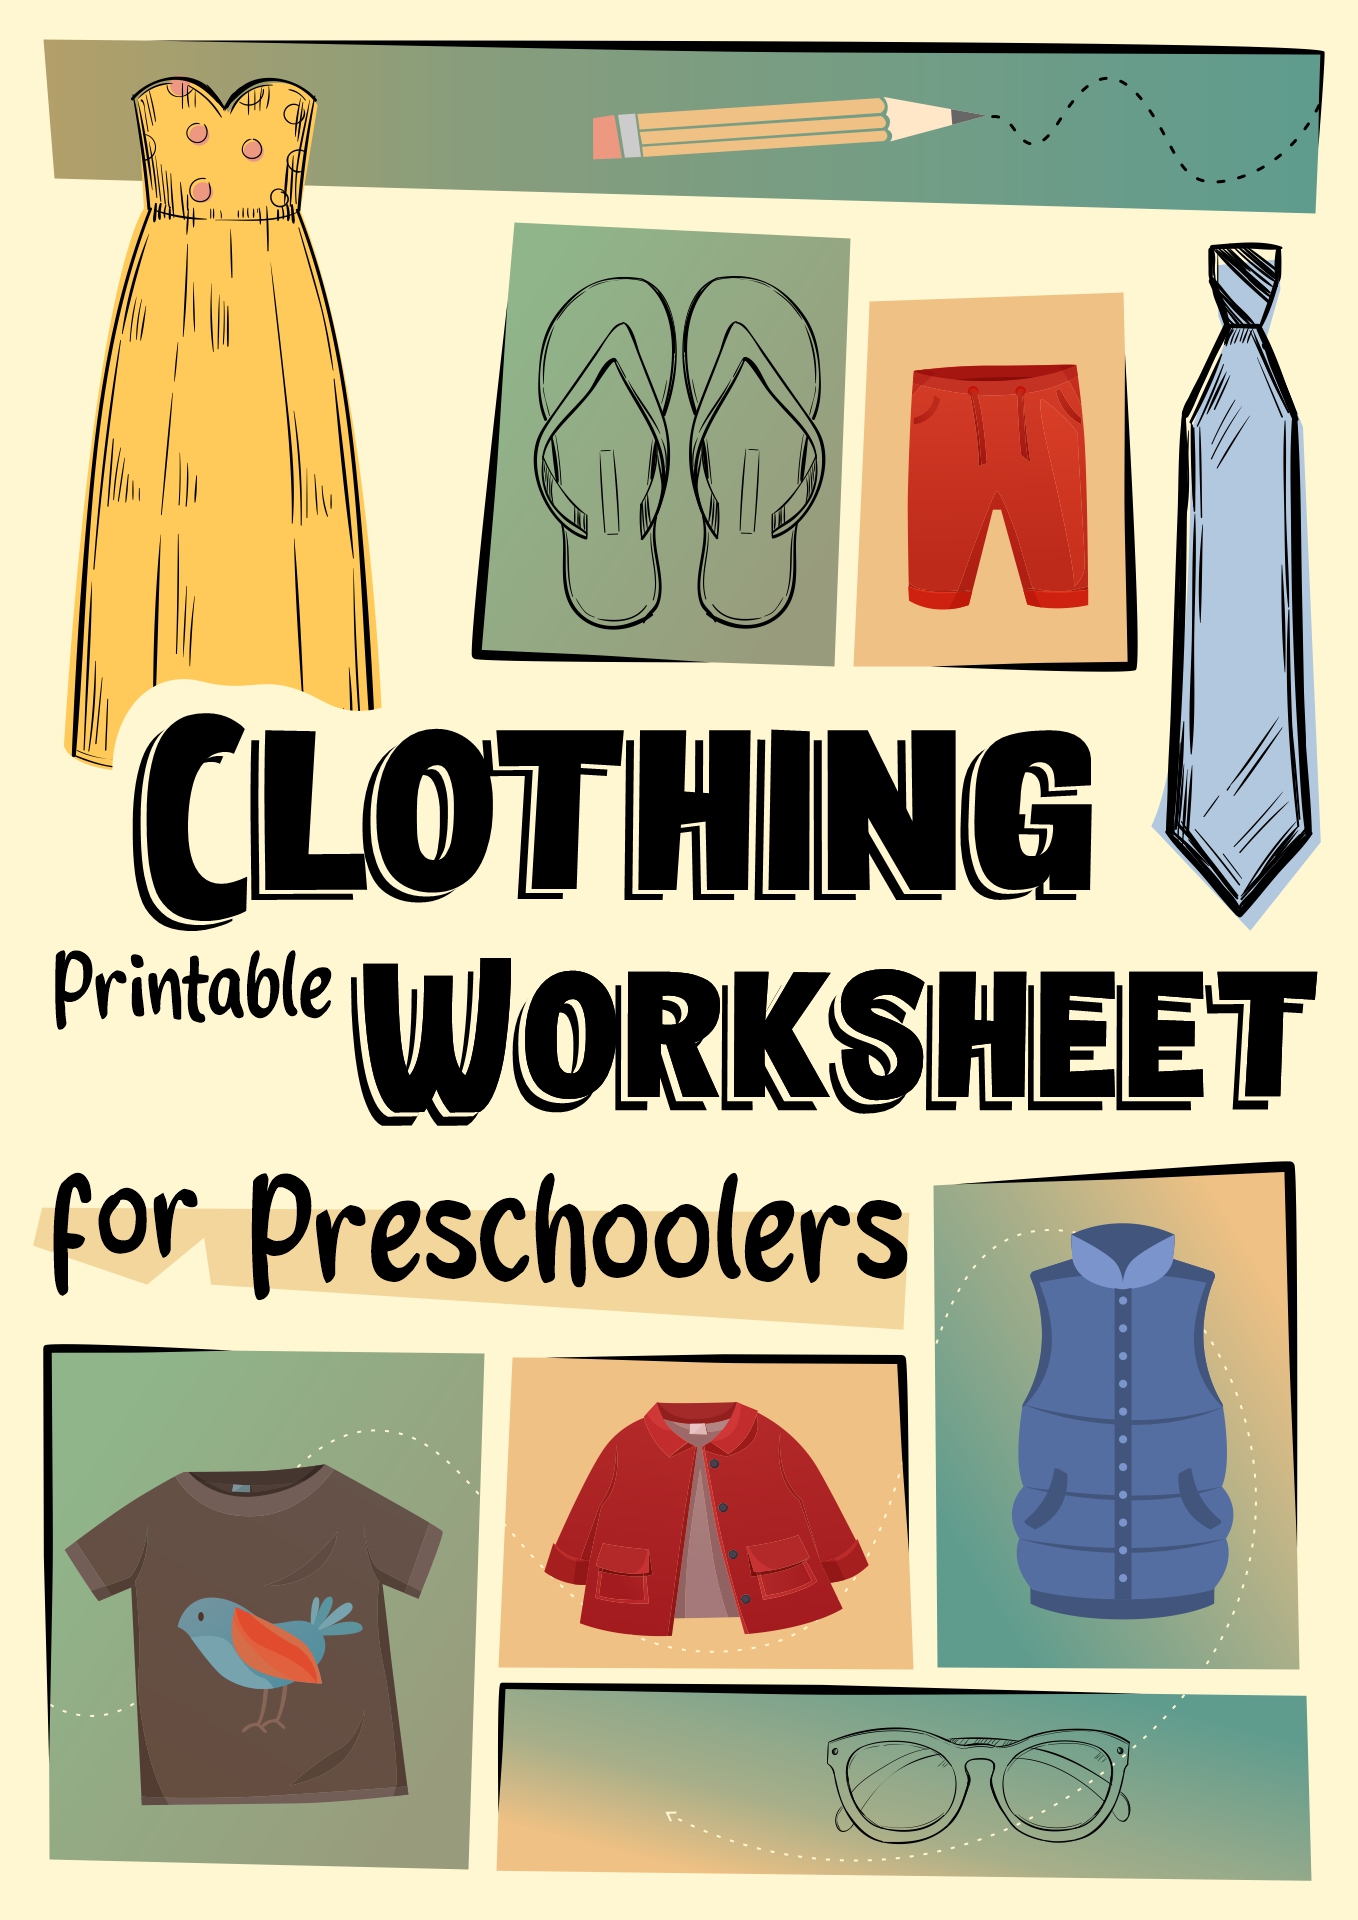 Clothing Printable Worksheets for Preschoolers